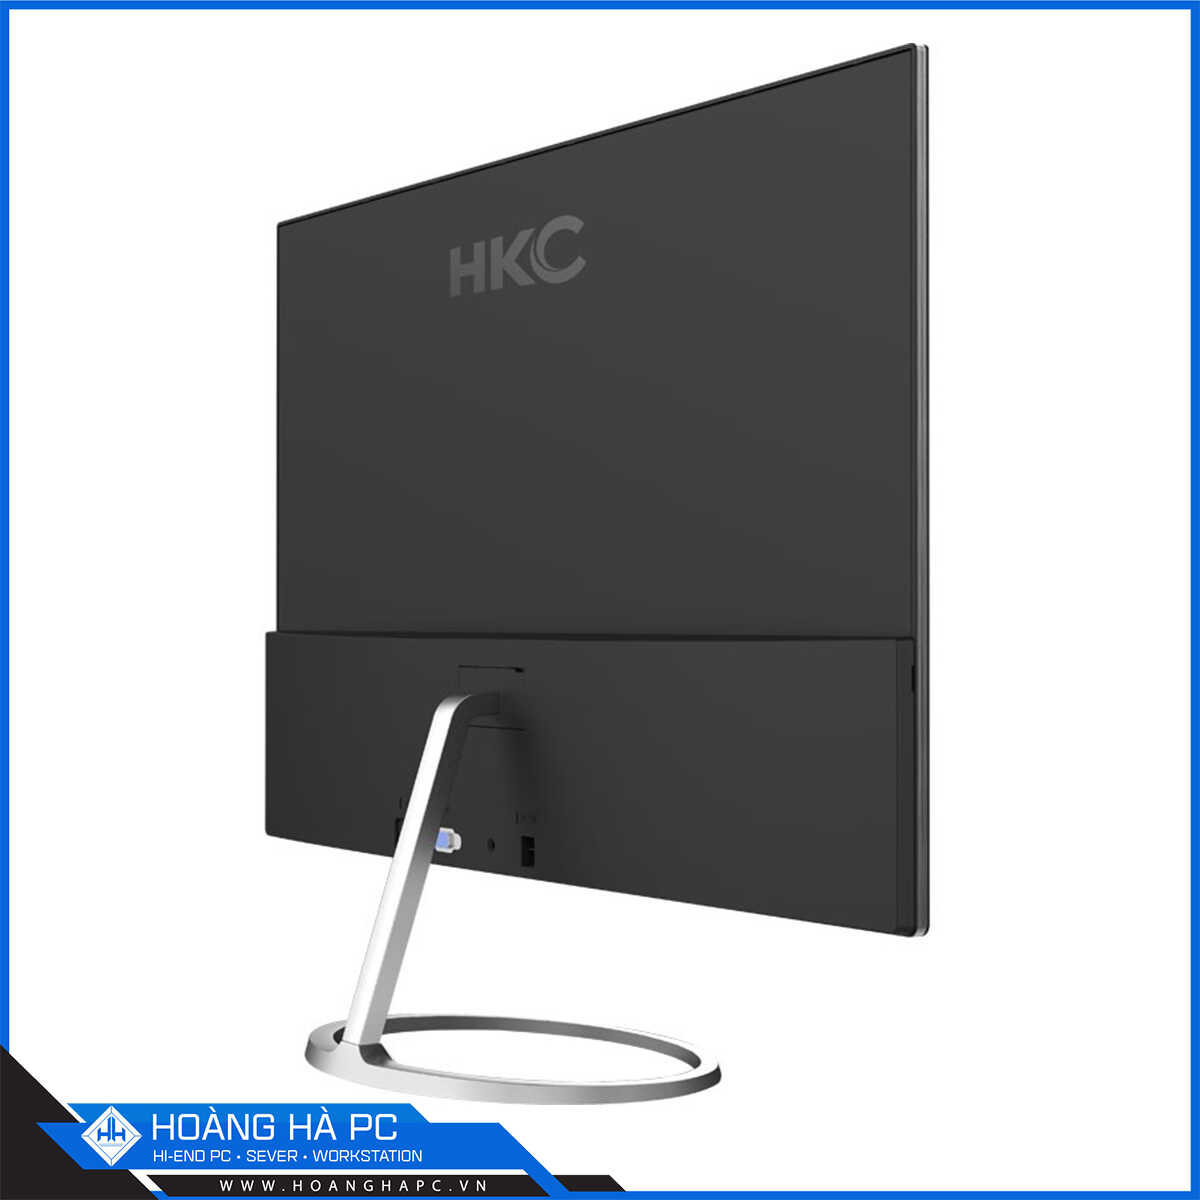 HKC HA238 (23.8 inch / FHD / IPS / 75 Hz) 